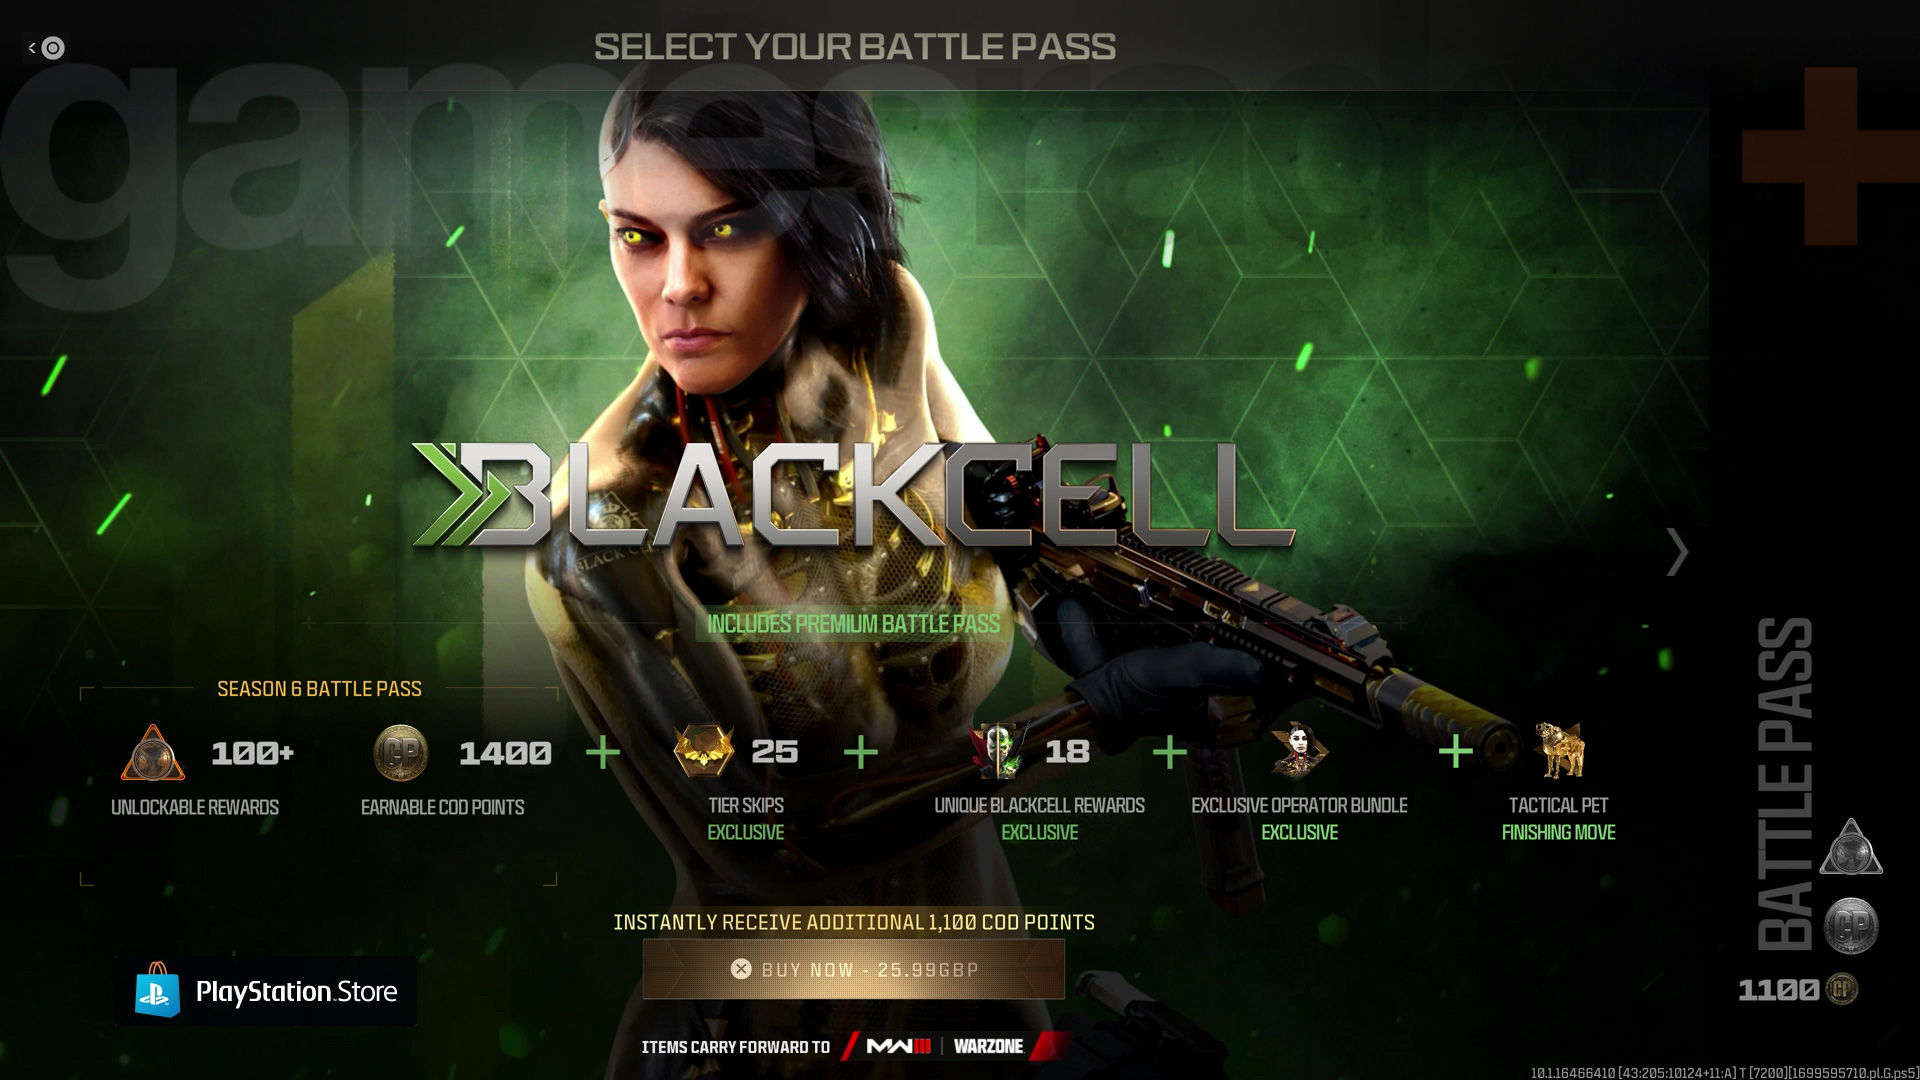 BlackCell Modern Warfare 3 Battle Pass Season 1